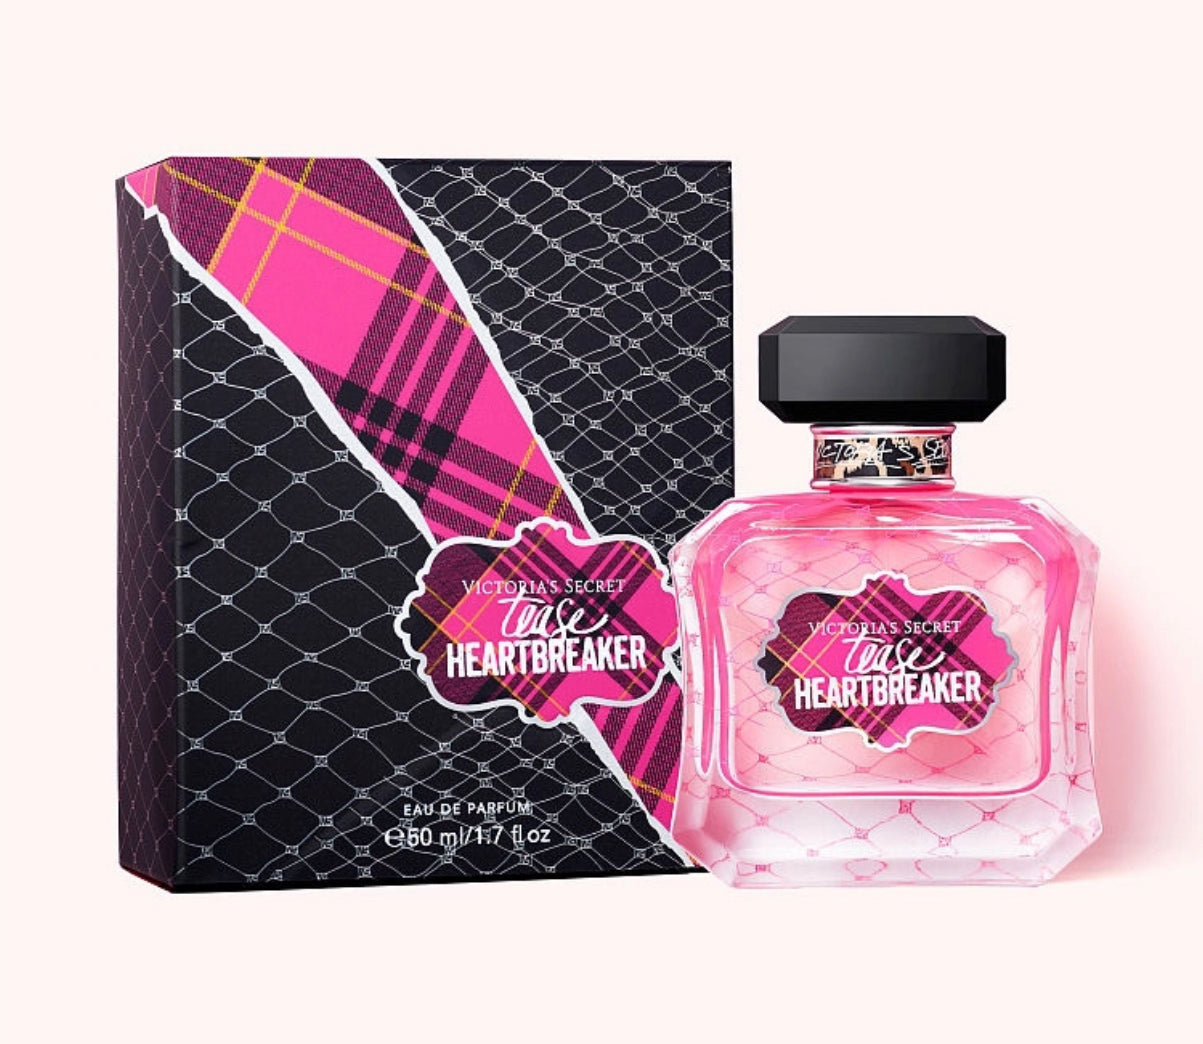 "Victoria’s Secret" Tease Heartbreaker Fragrance